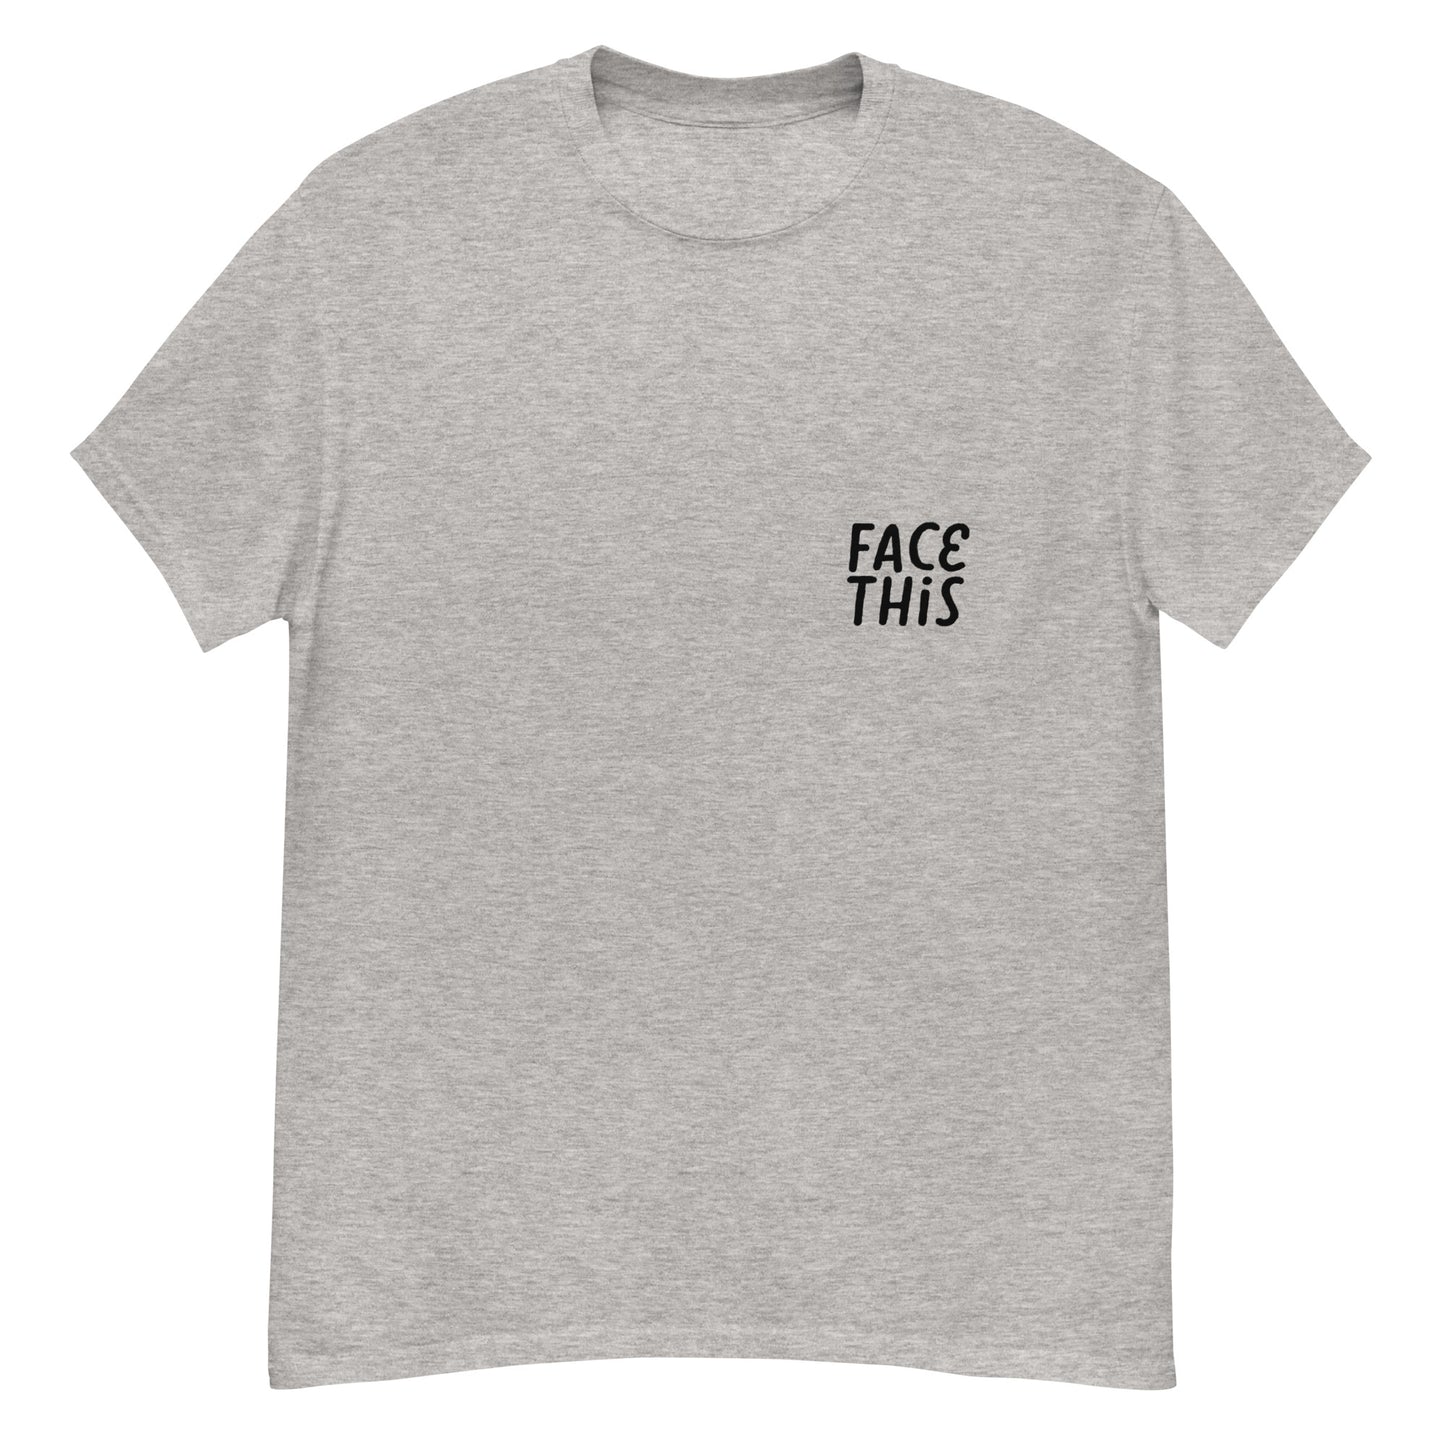 Grace Miceli x Face This T-shirt